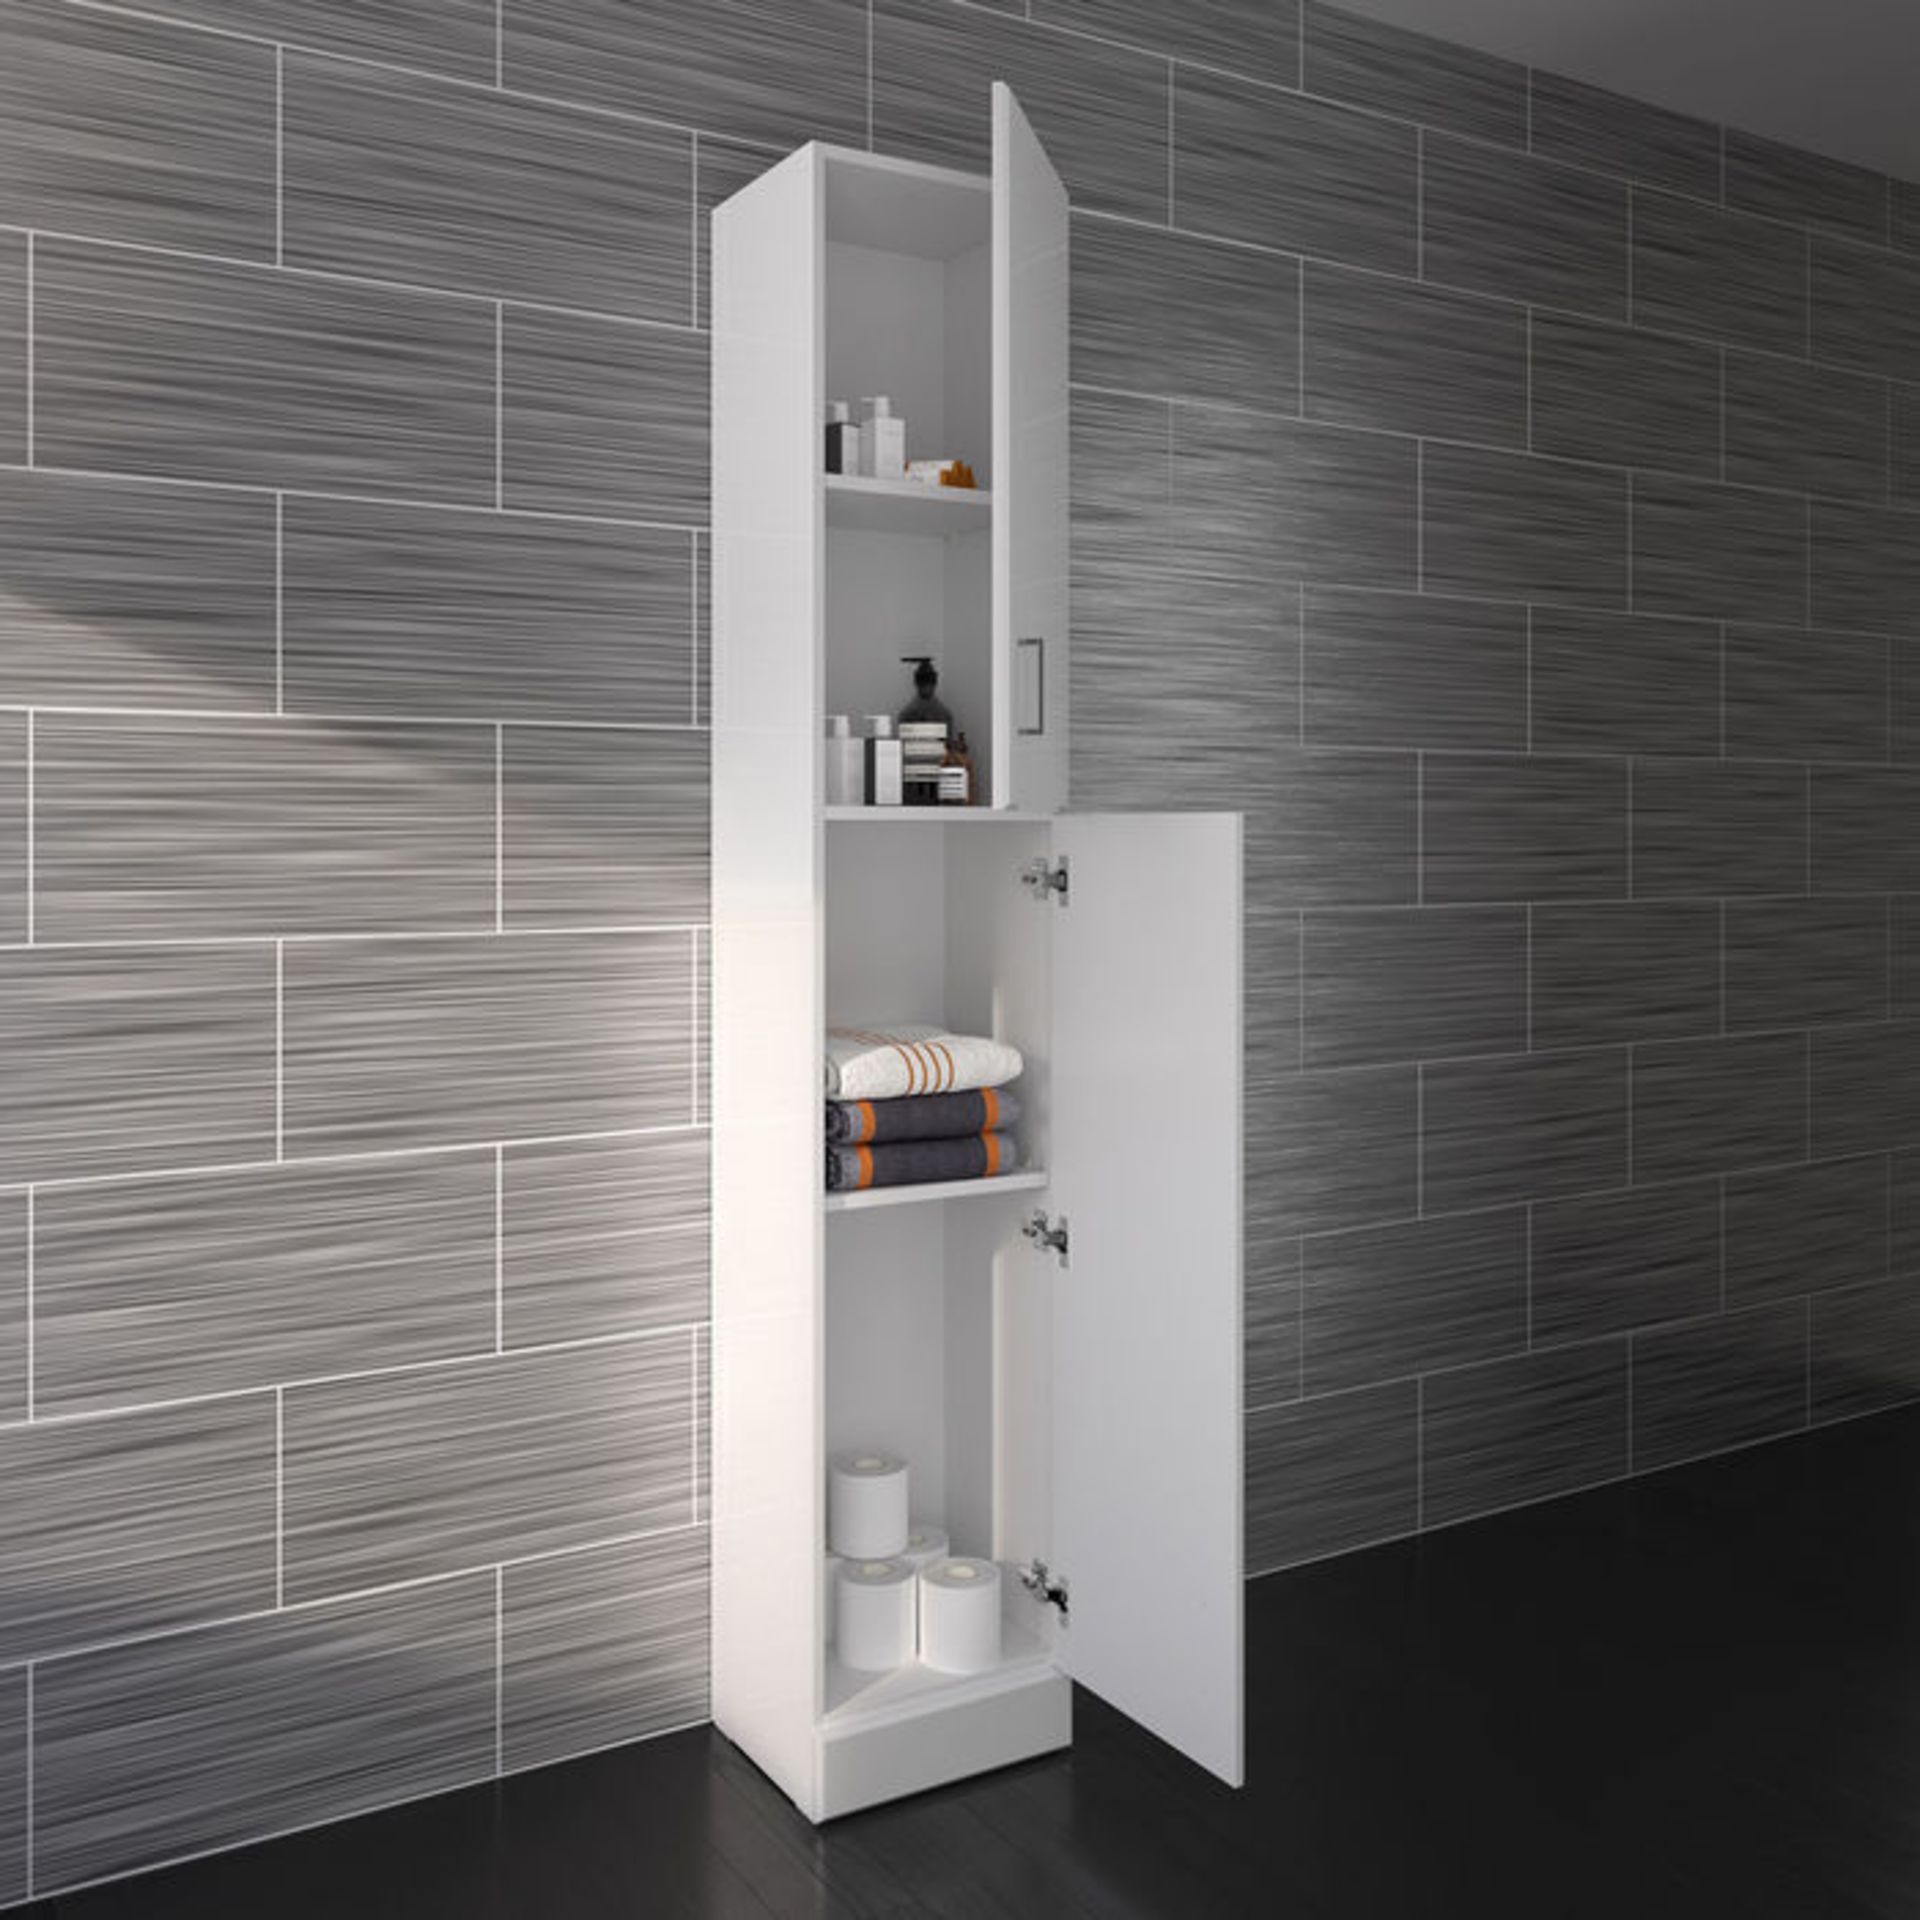 (GR146) 1900x330mm Quartz Gloss White Tall Storage Cabinet - Floor Standing. RRP £251.99. Pristine - Image 3 of 3